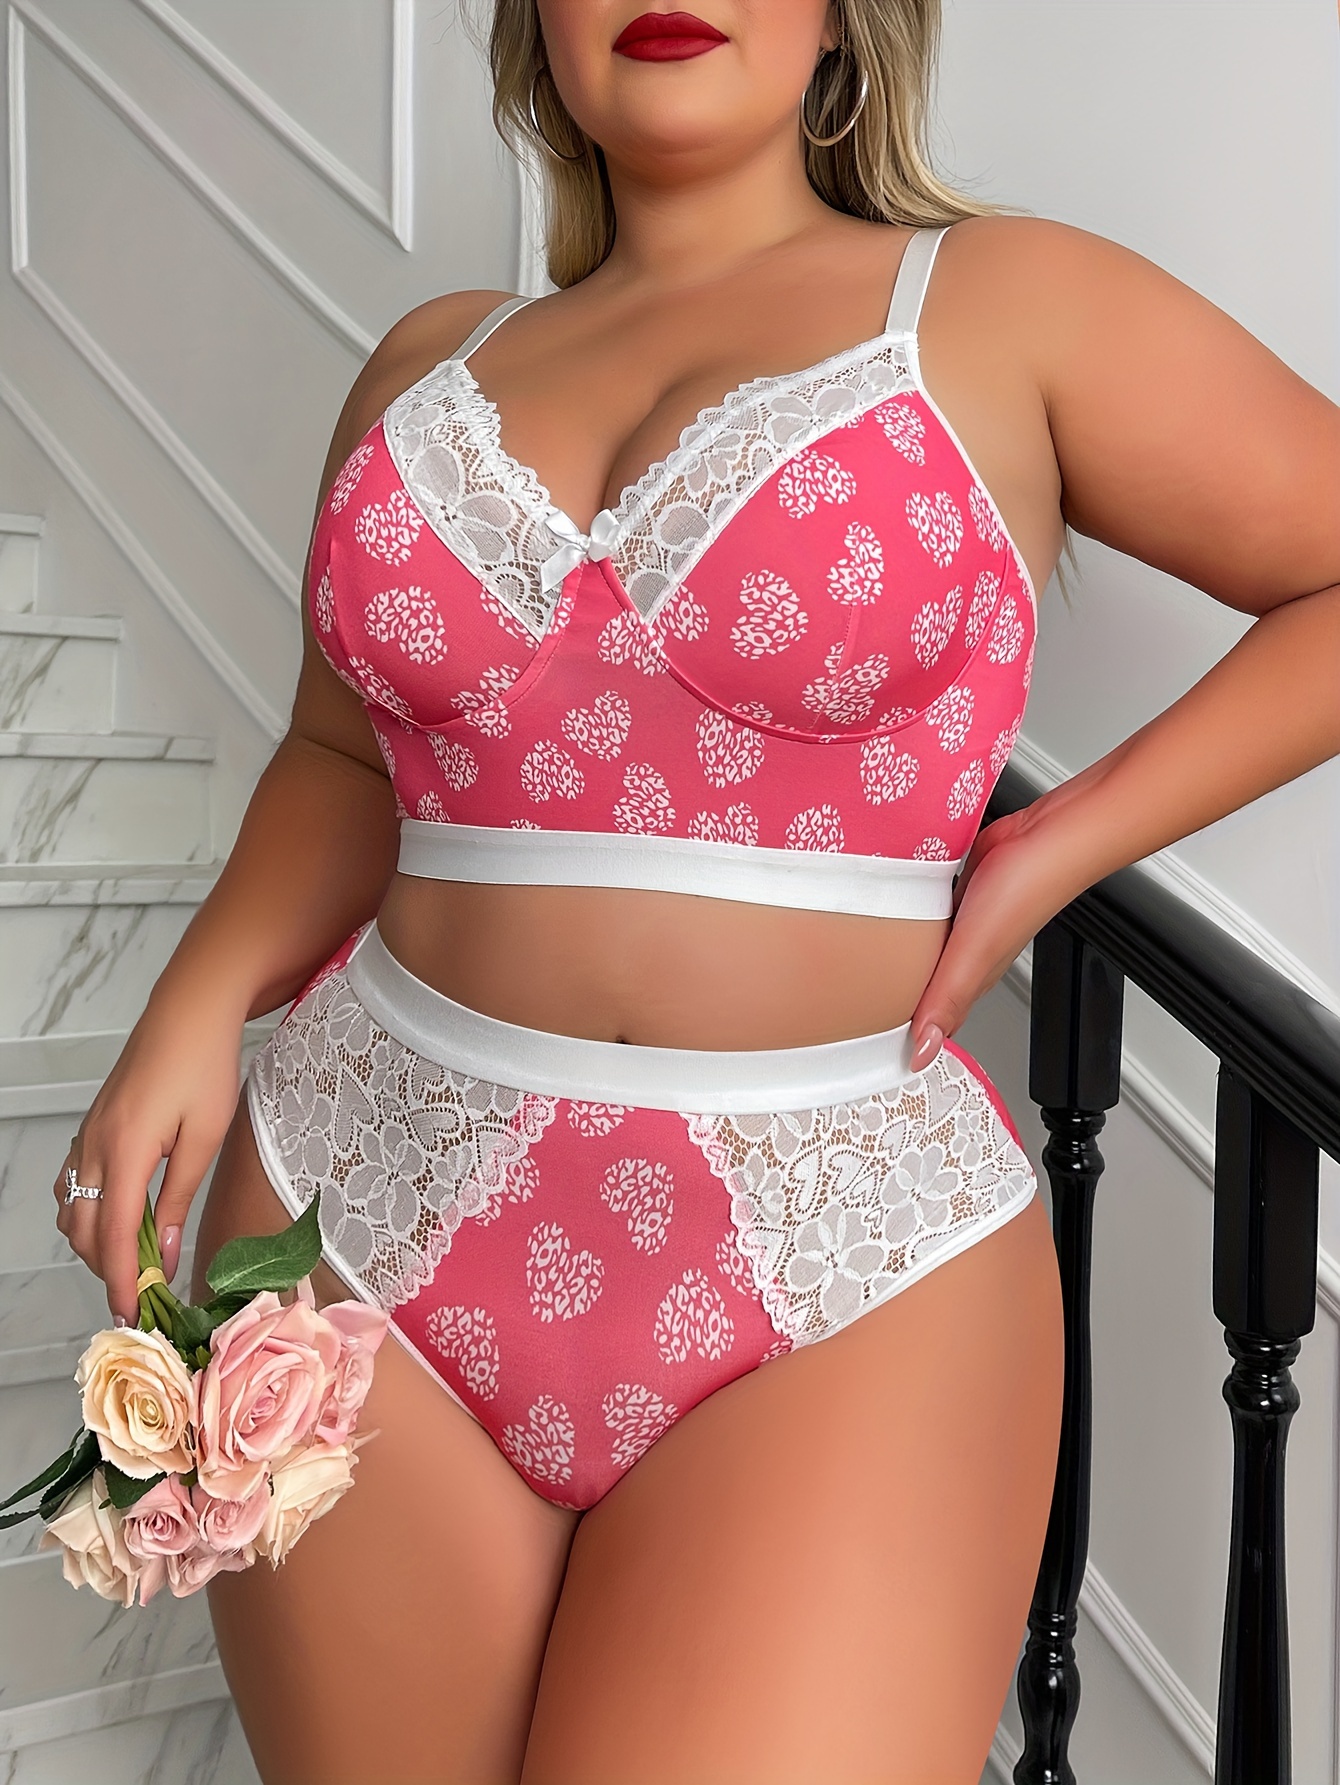 Nananla Women Valentine's Day Underwear Plus Size Lace Sexy Lingerie Sets 